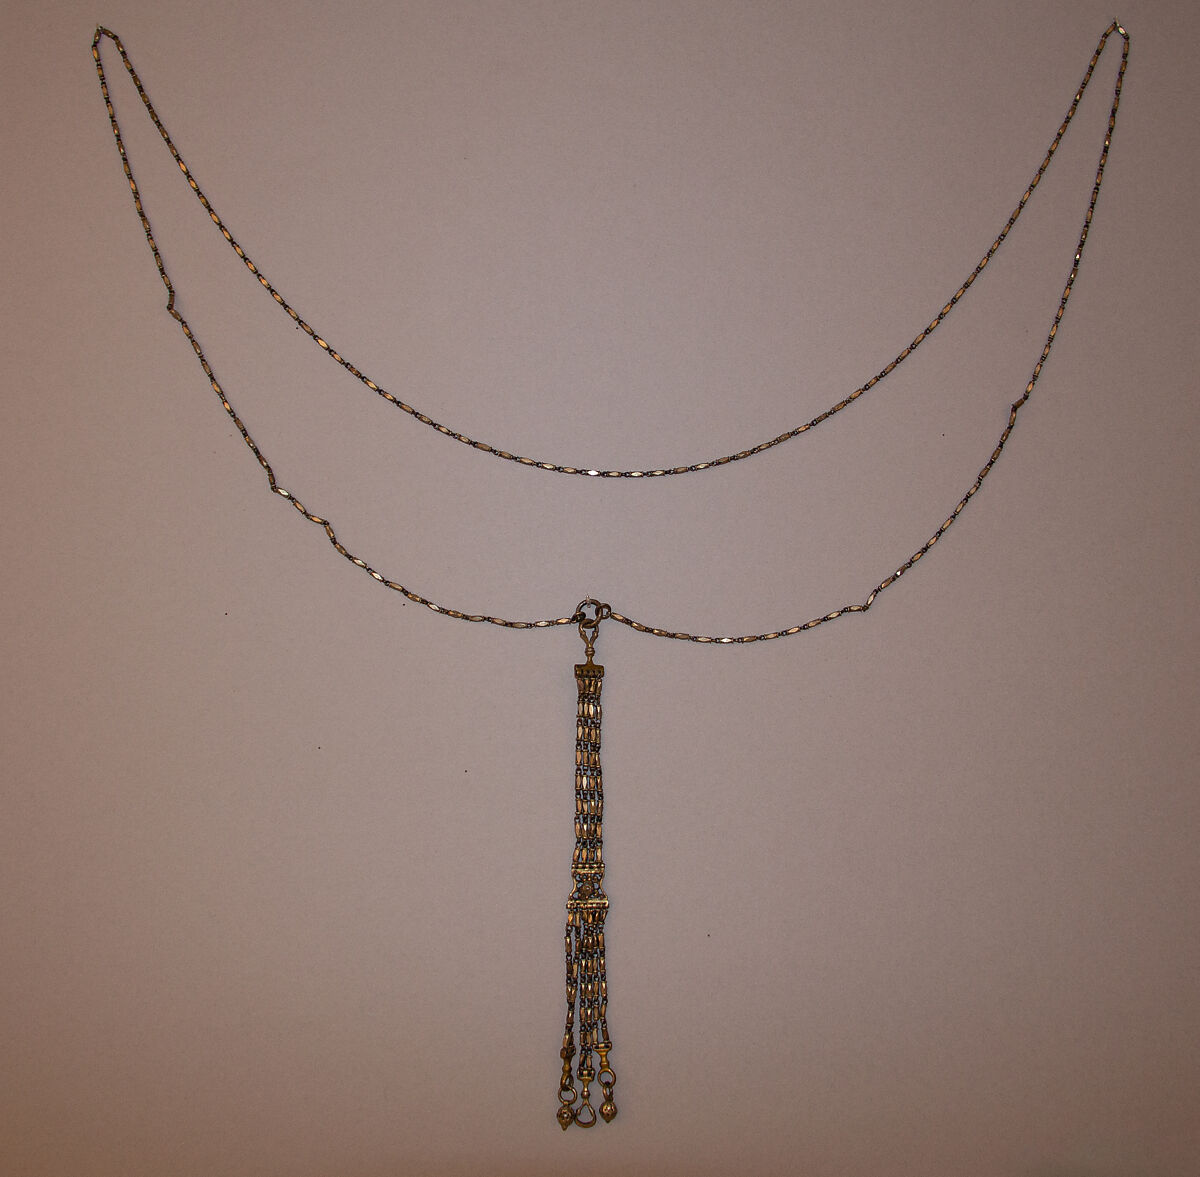 Necklace | The Metropolitan Museum of Art